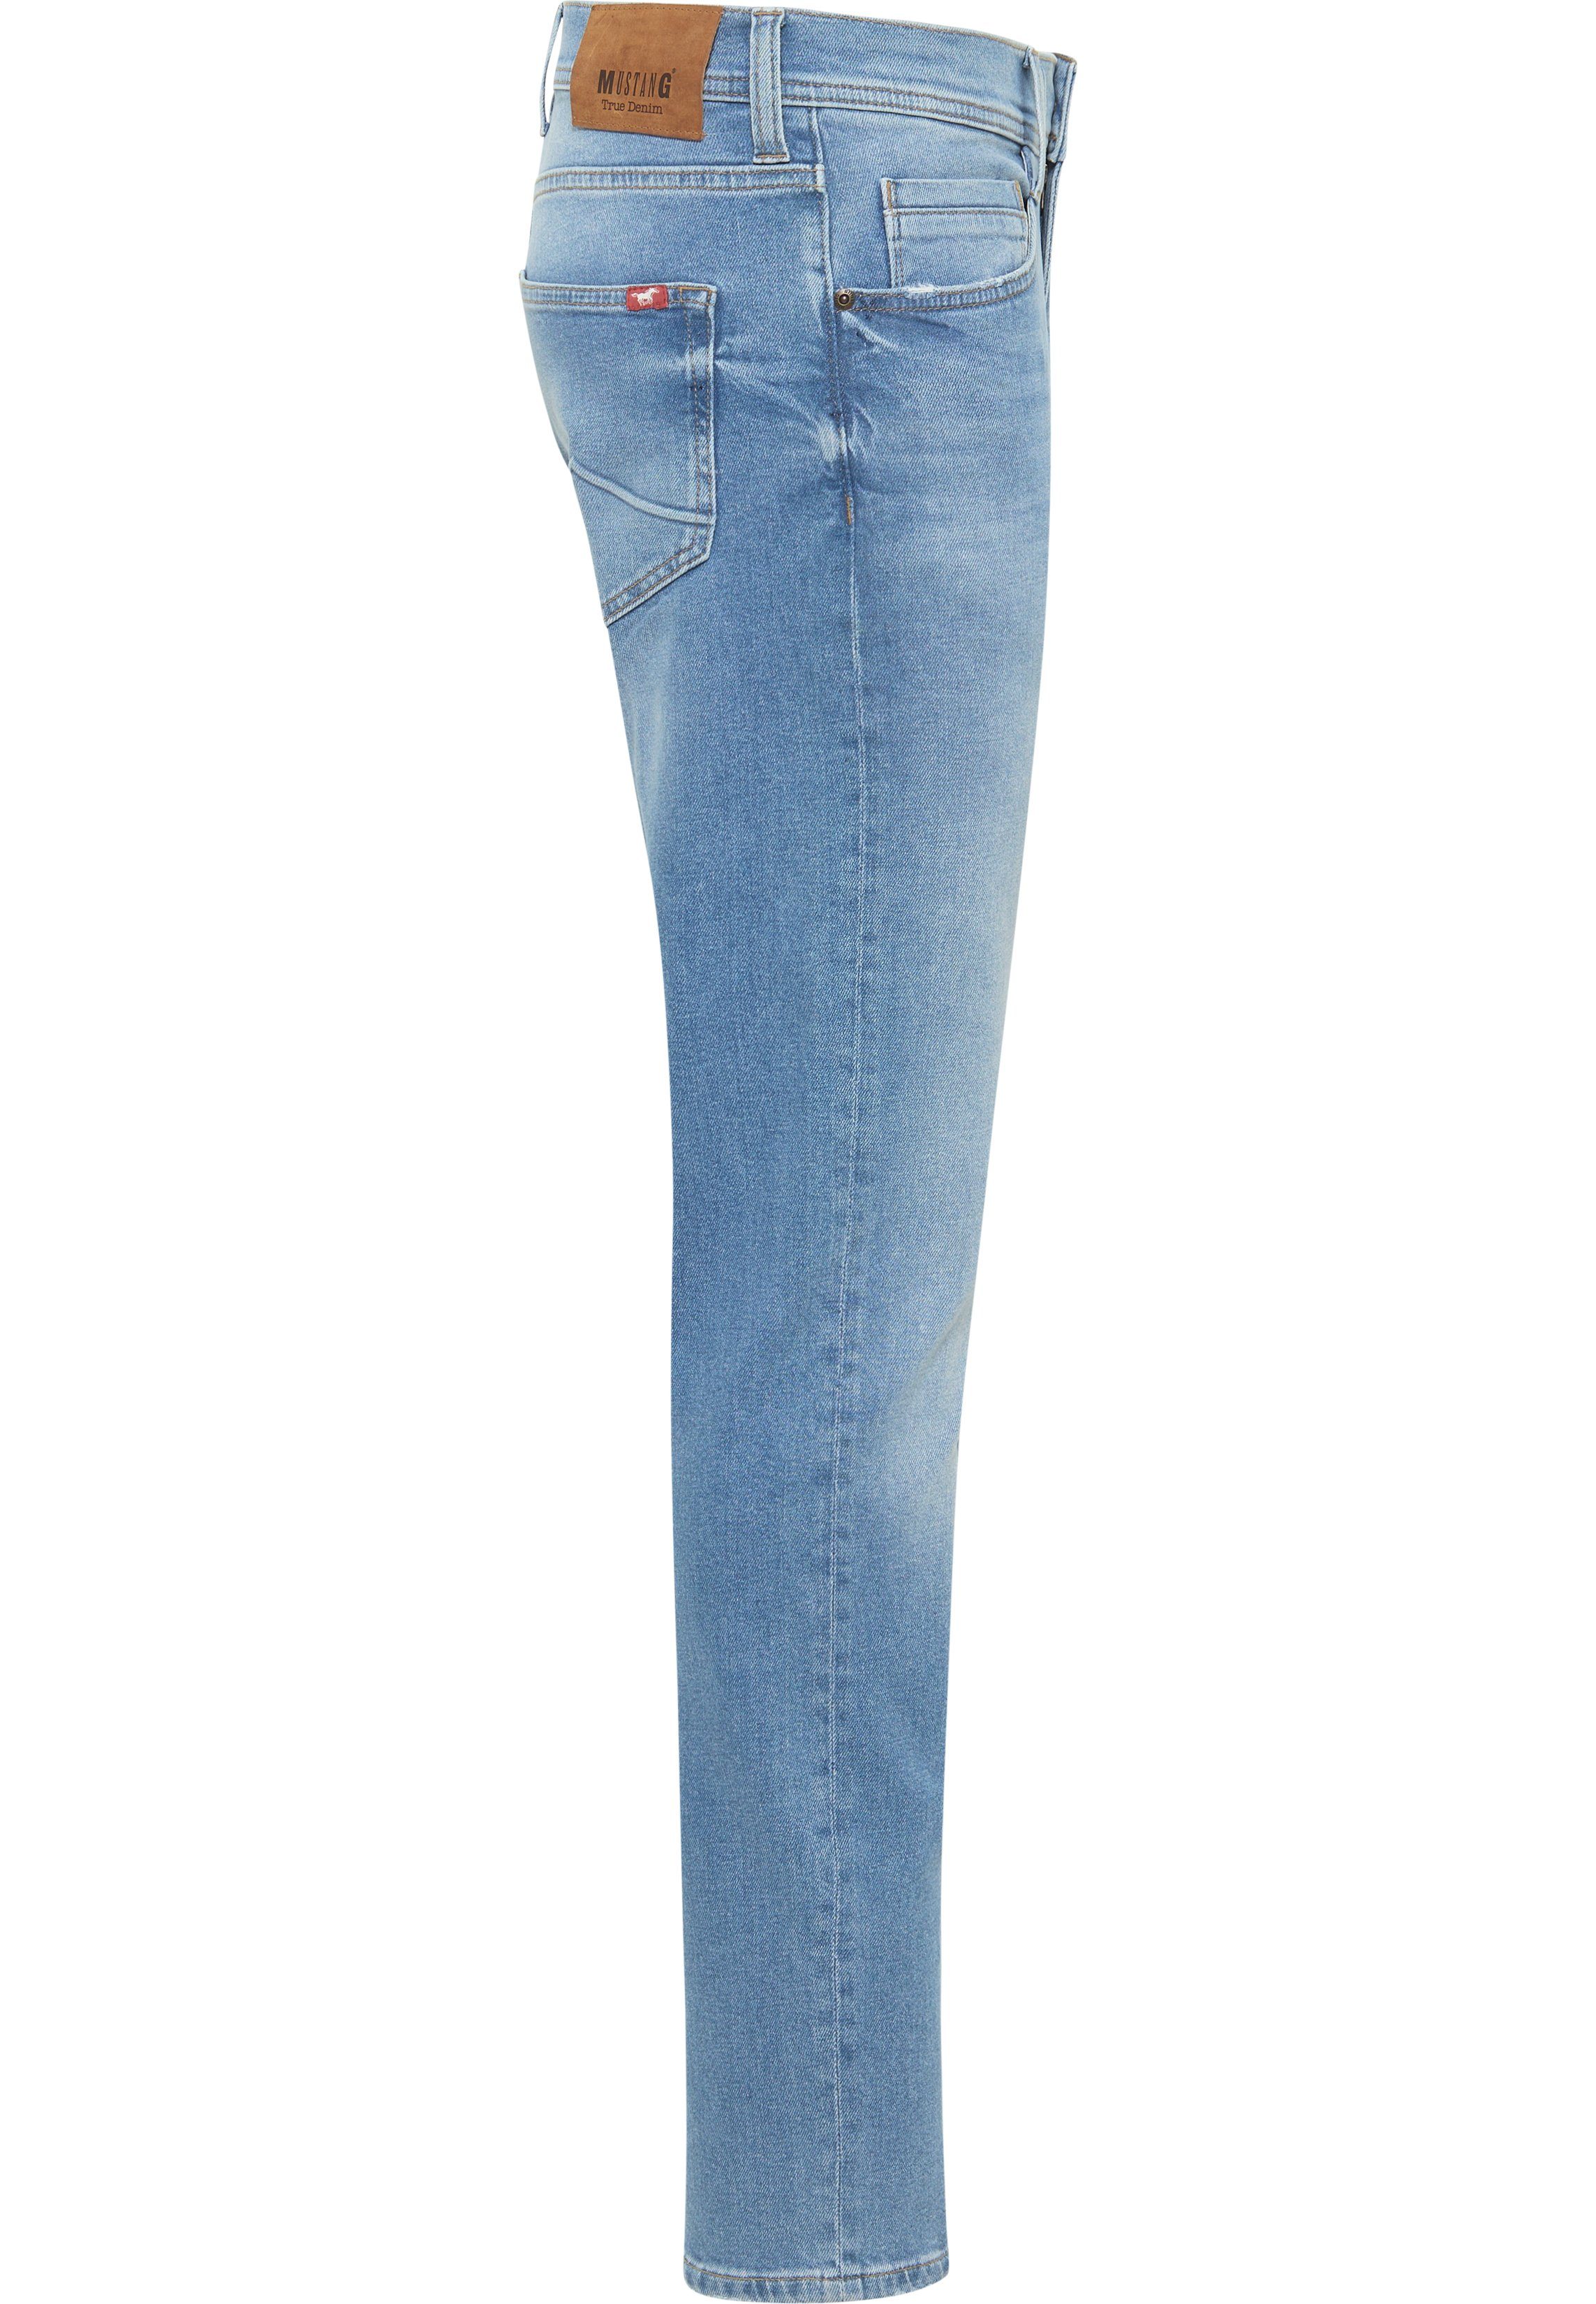 MUSTANG 5-Pocket-Jeans used Oregon Tapered blue light